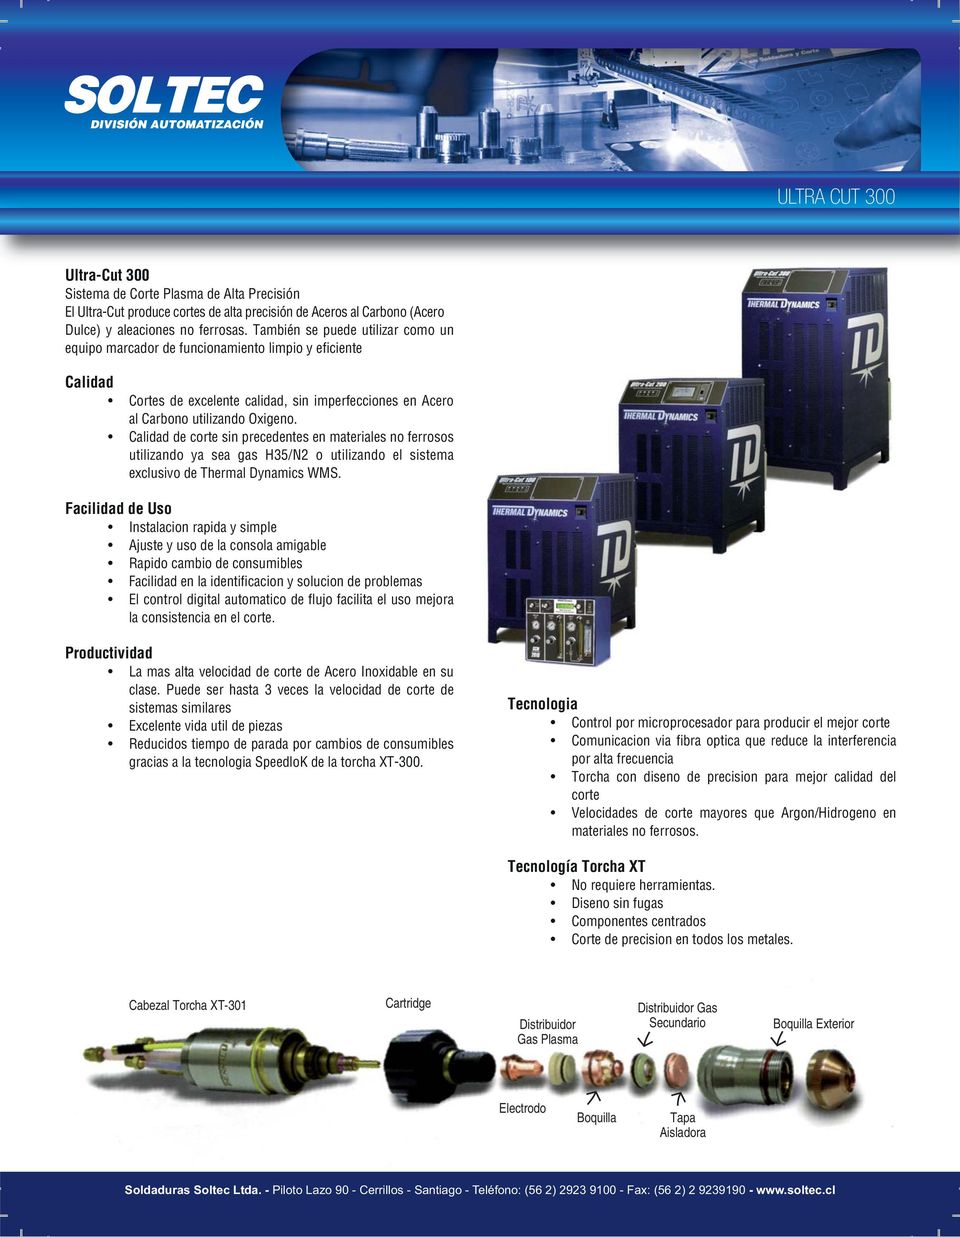 Torcha XT-301 Cartridge Distribuidor Gas Plasma